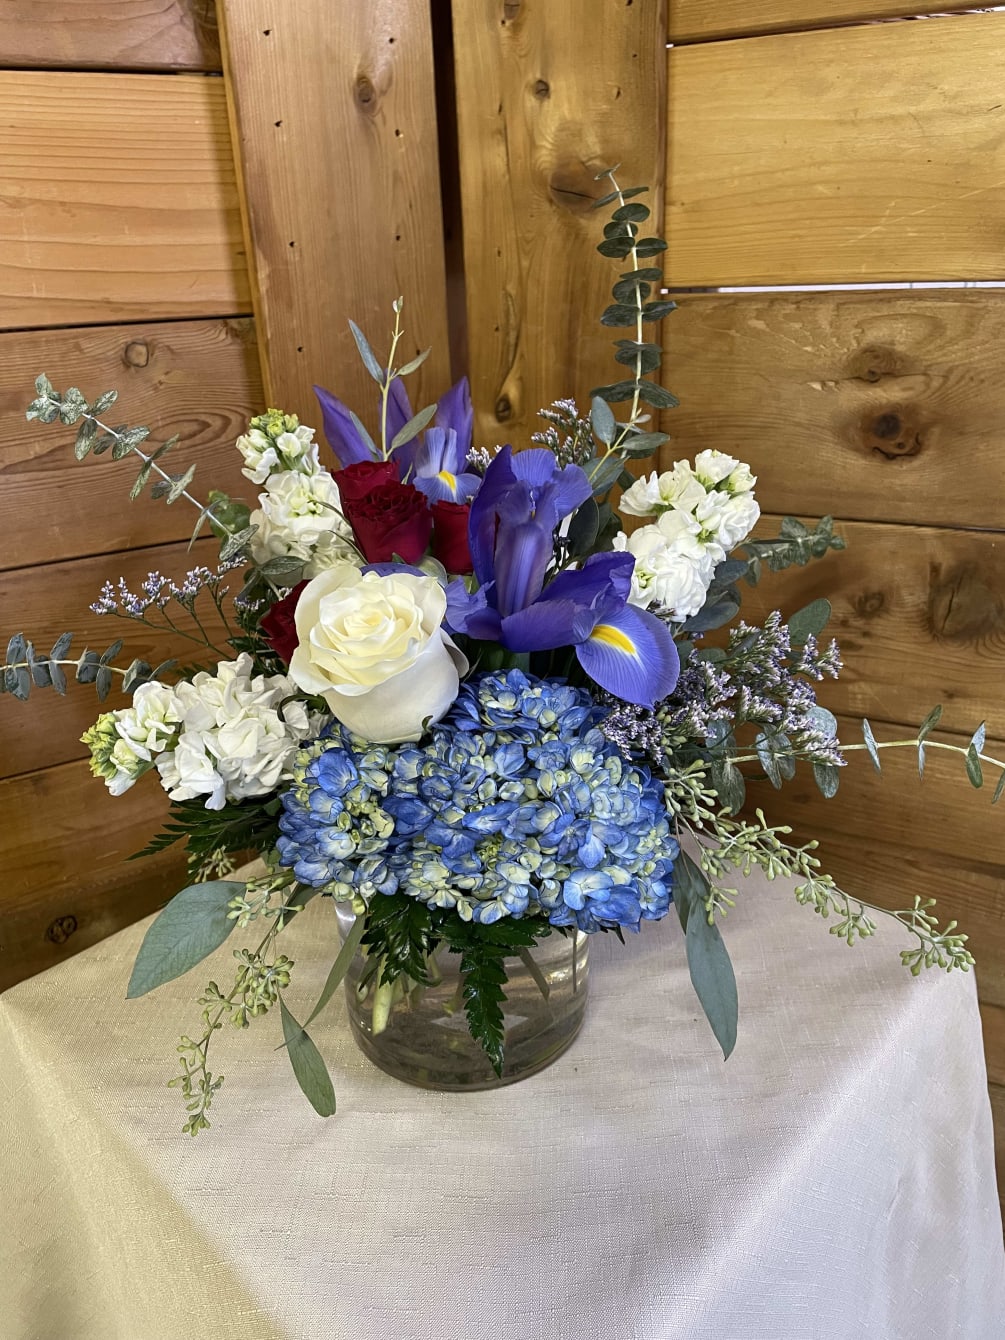 This patriotic color combination includes blue hydrangea, blue iris, white roses, white